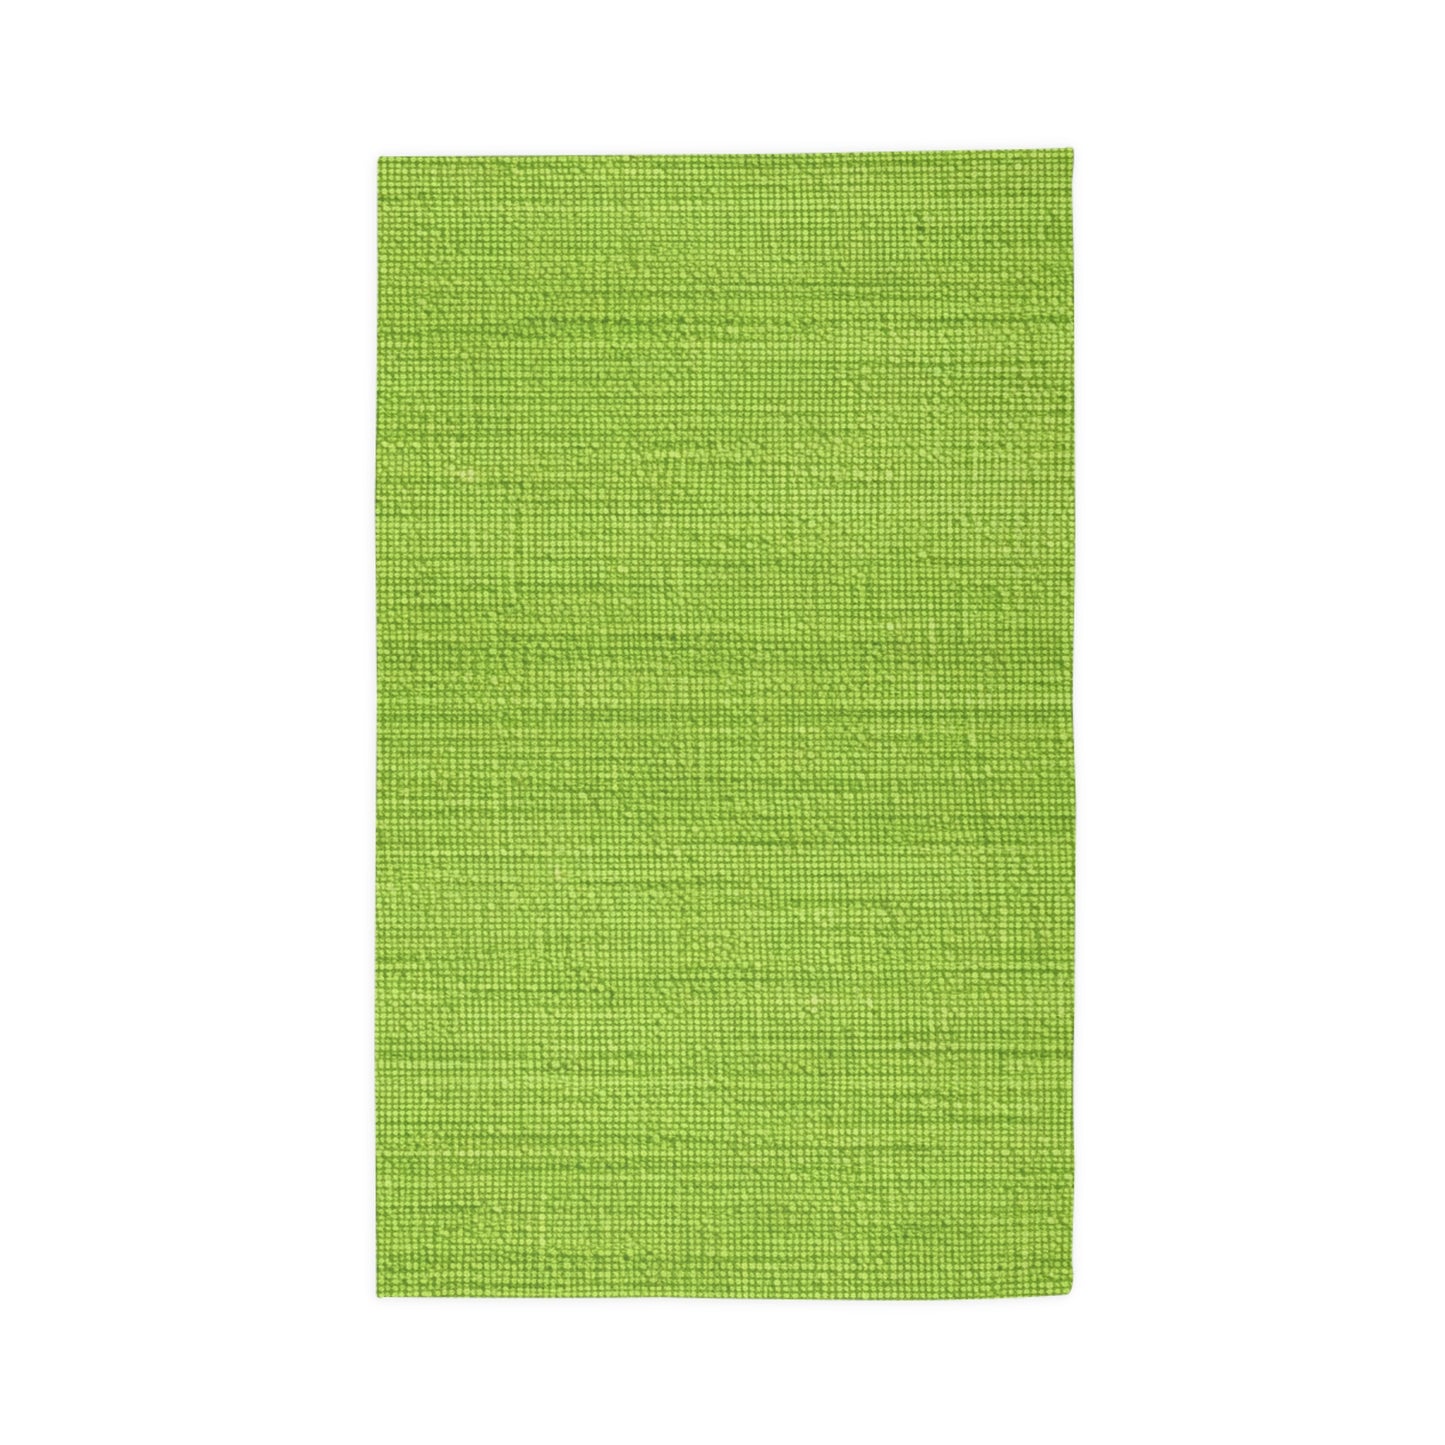 Lush Grass Neon Green: Denim-Inspired, Springtime Fabric Style - Dobby Rug